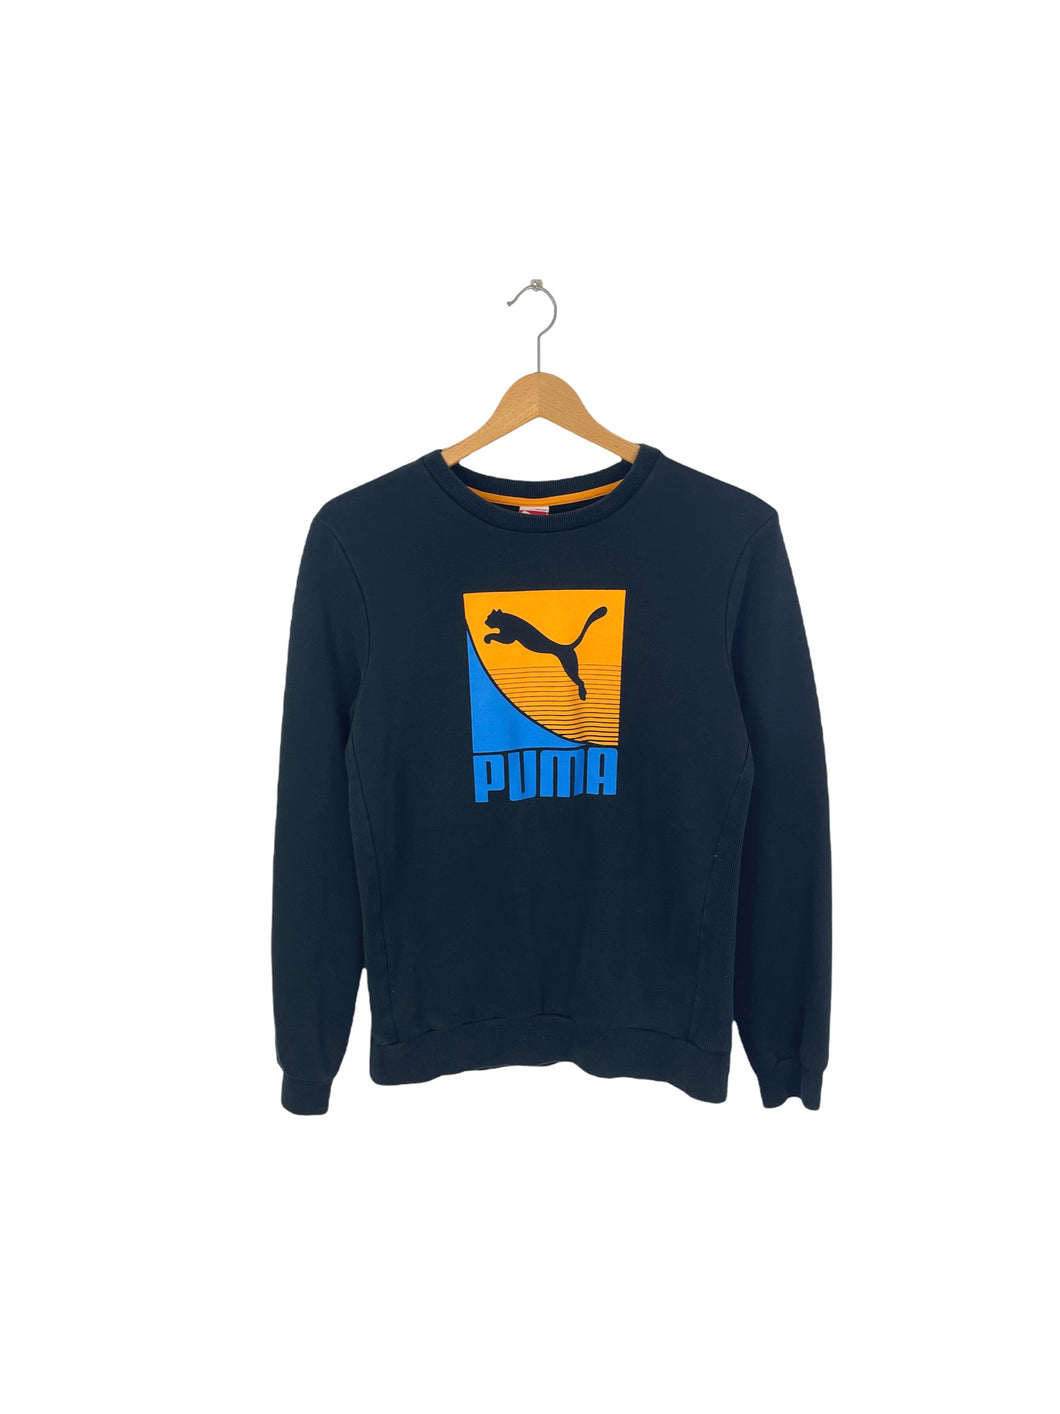 Puma Sweatshirt - XSmall